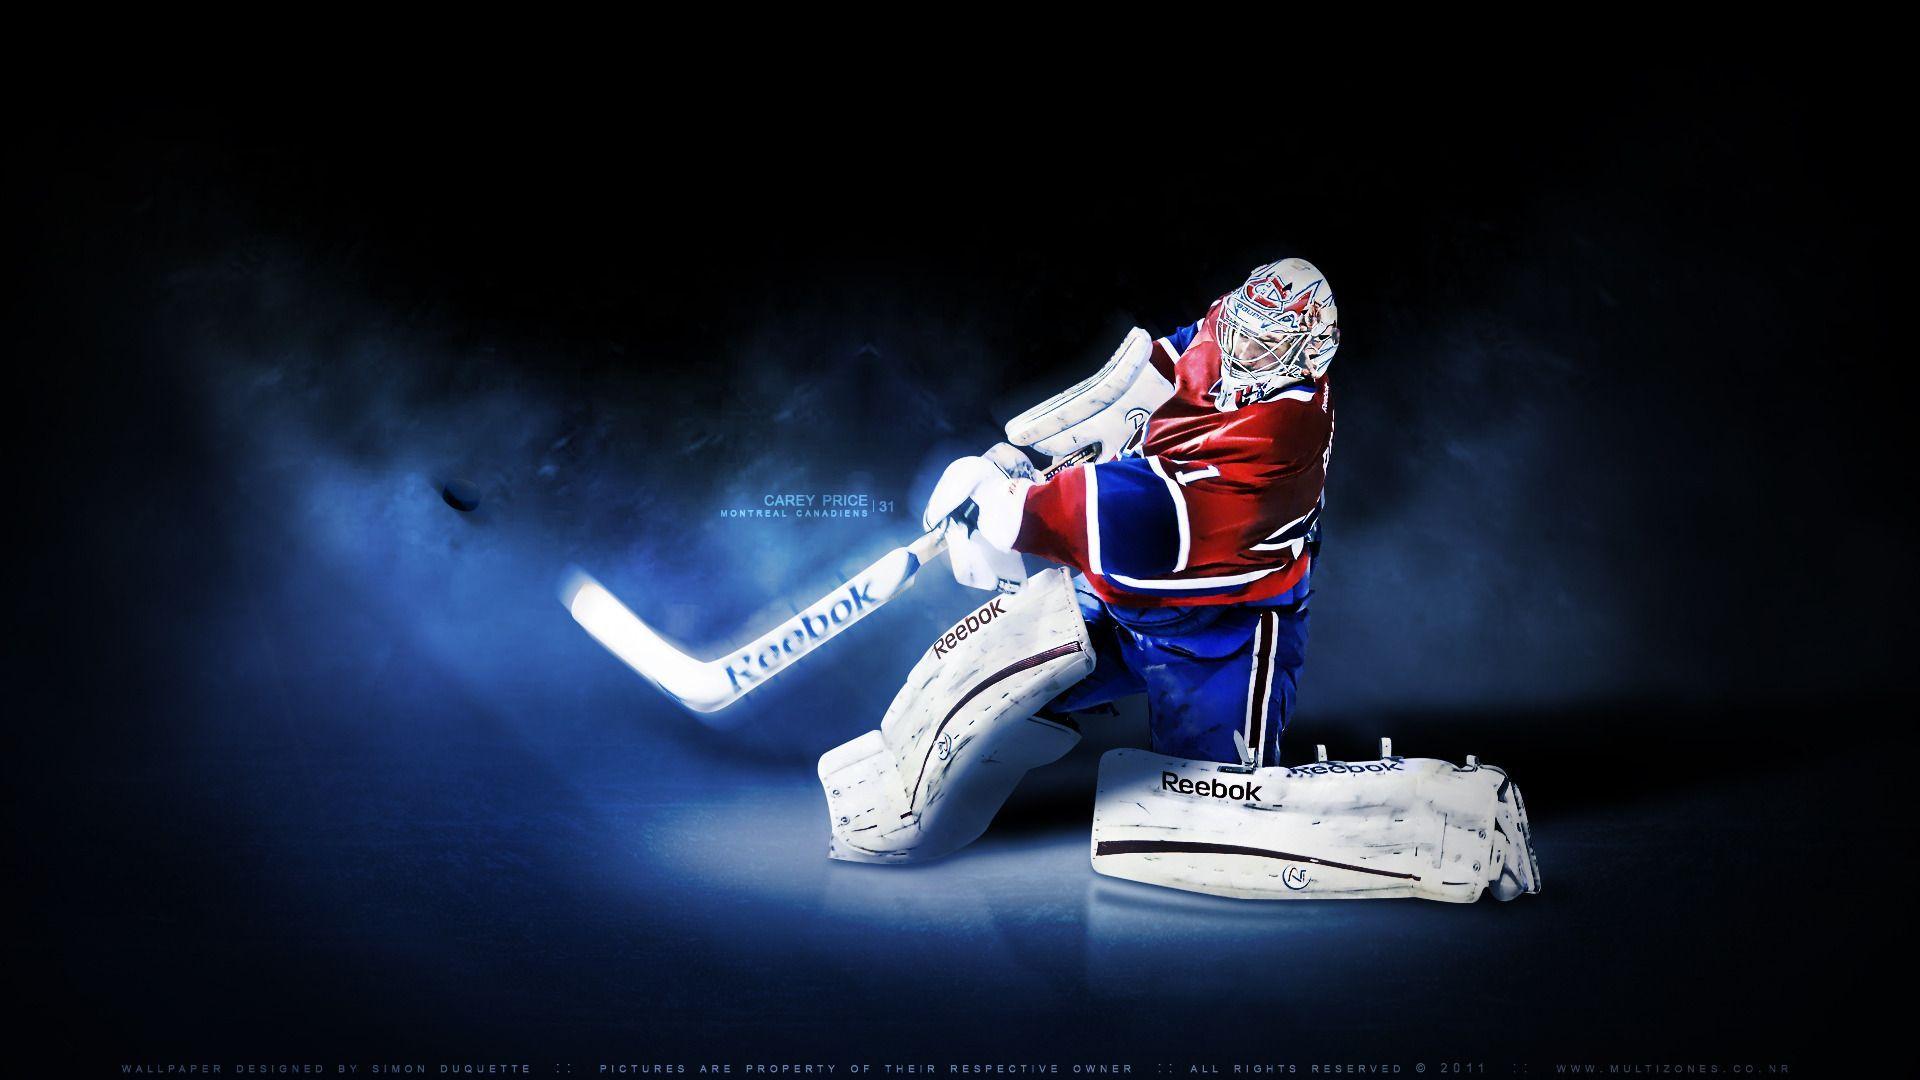 An NHL Wallpaper featuring Montreal Canadiens goaltender Carey